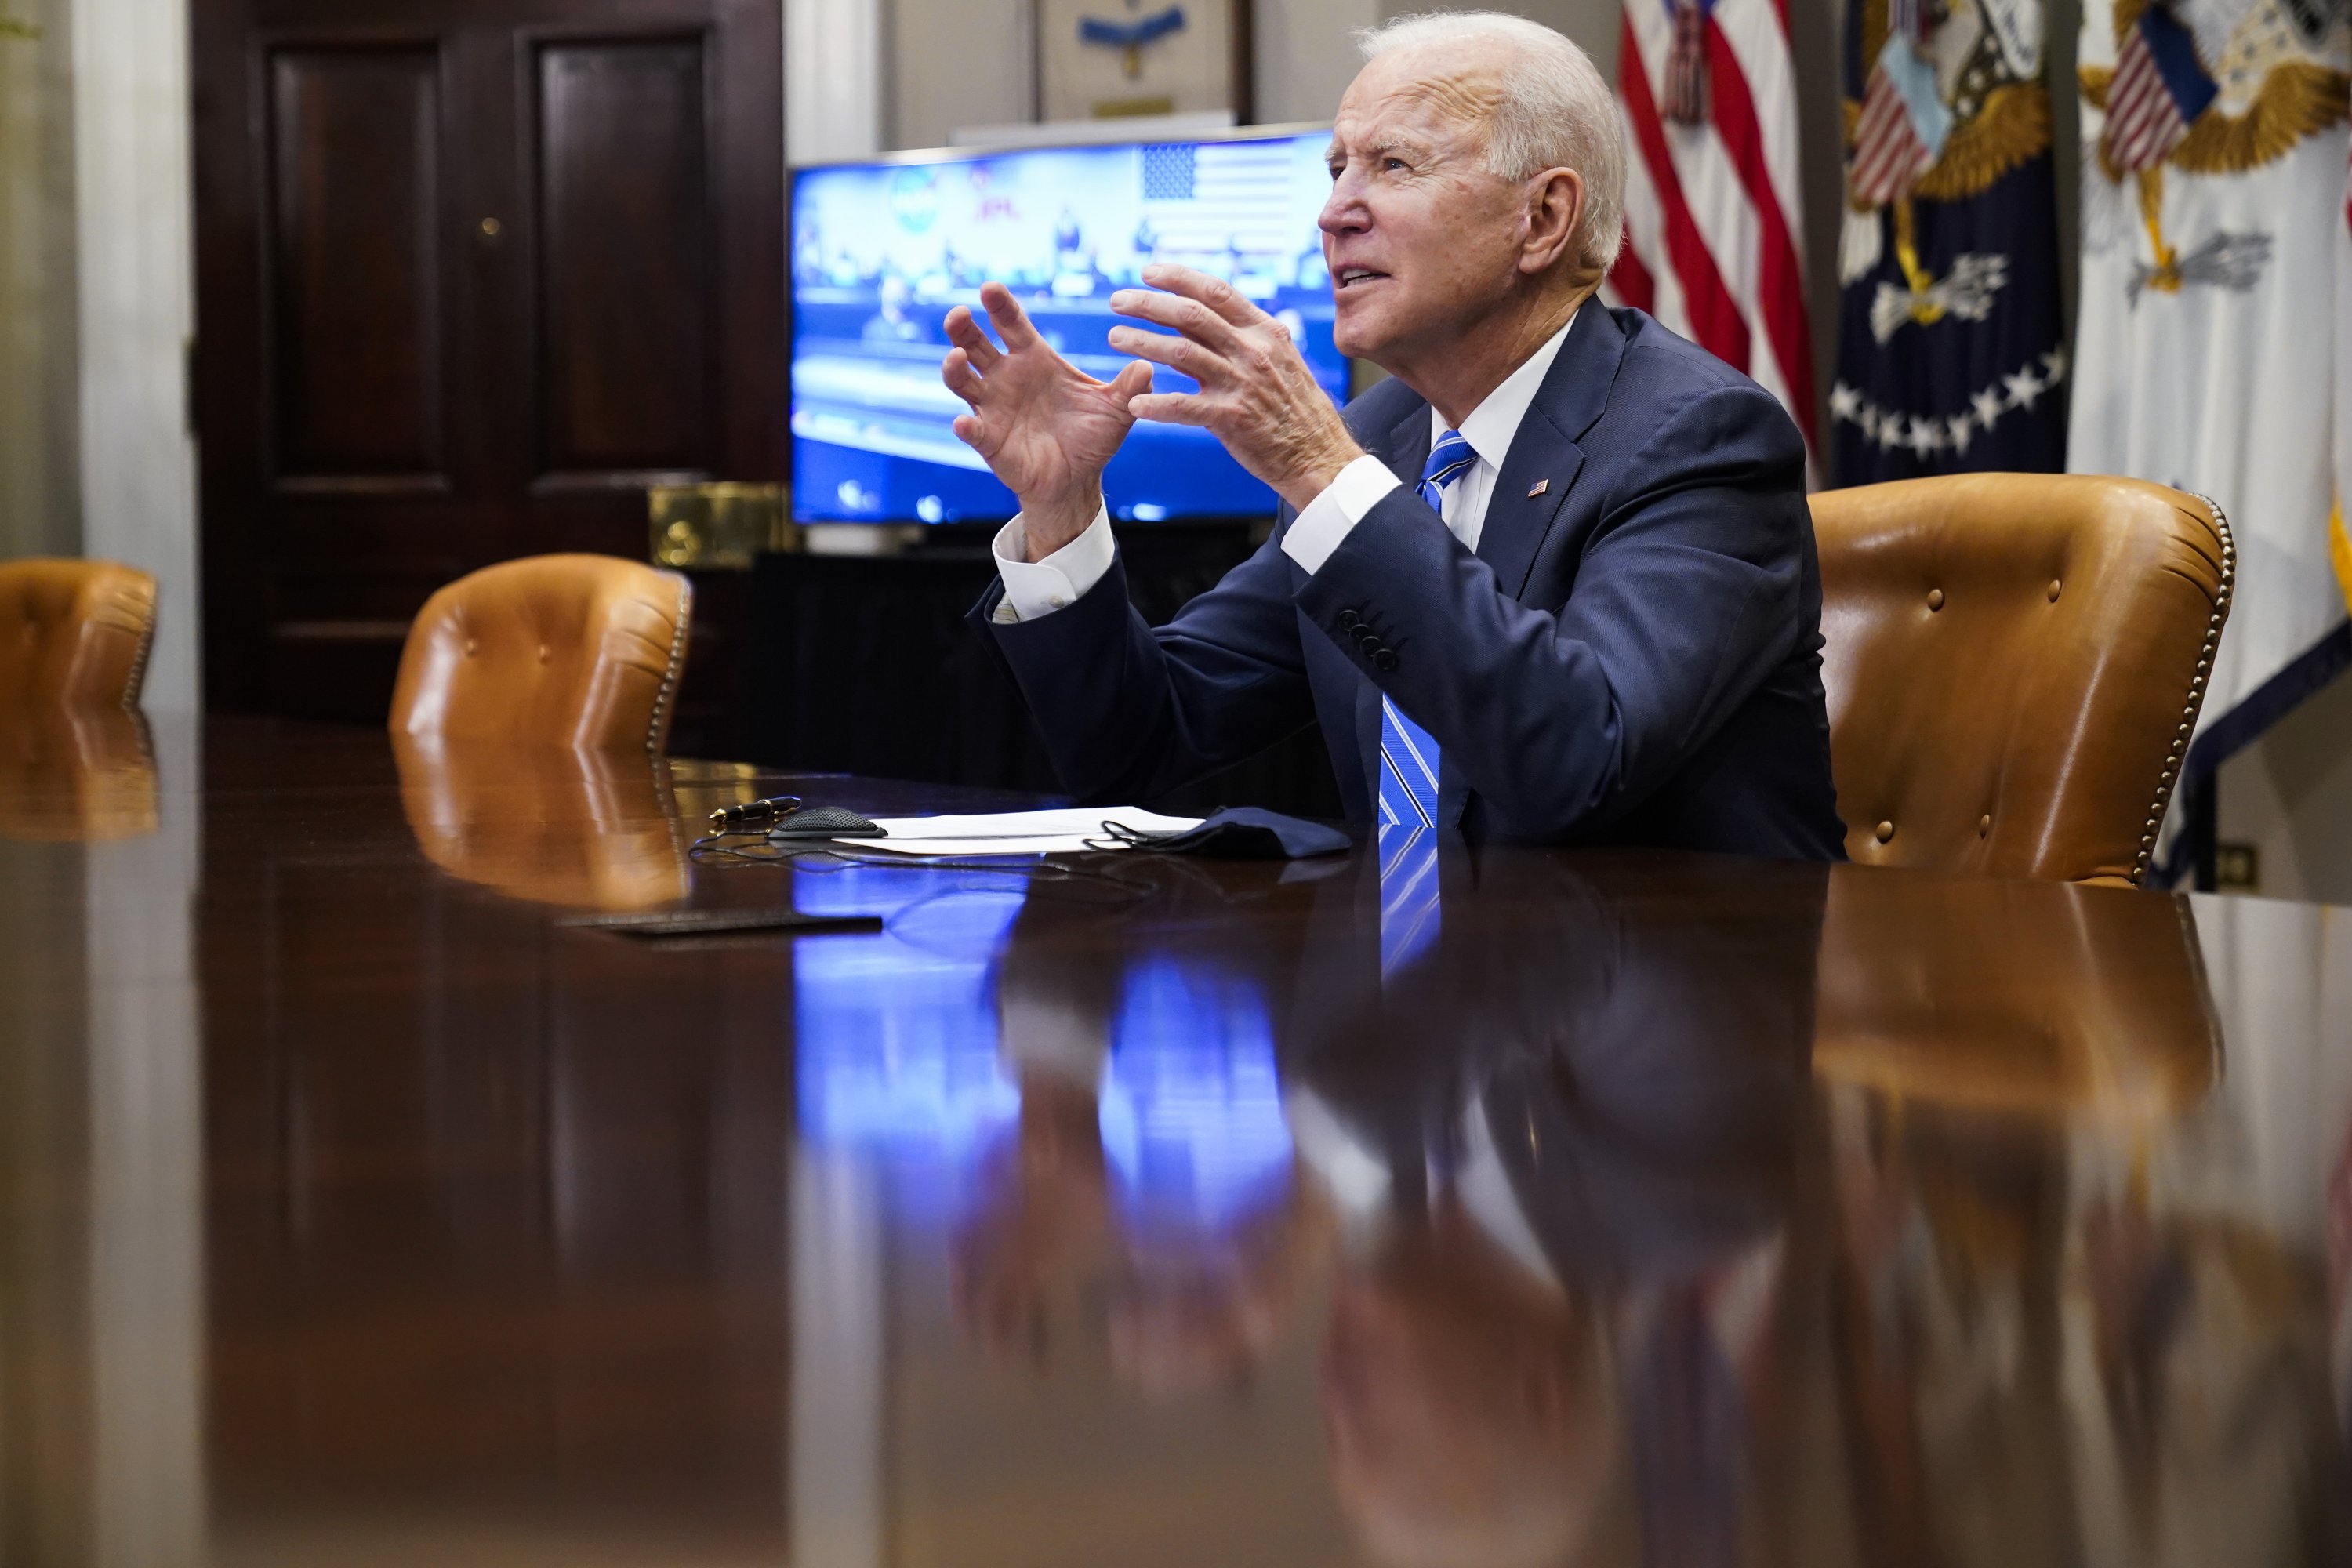 Americans largely support Biden’s virus response